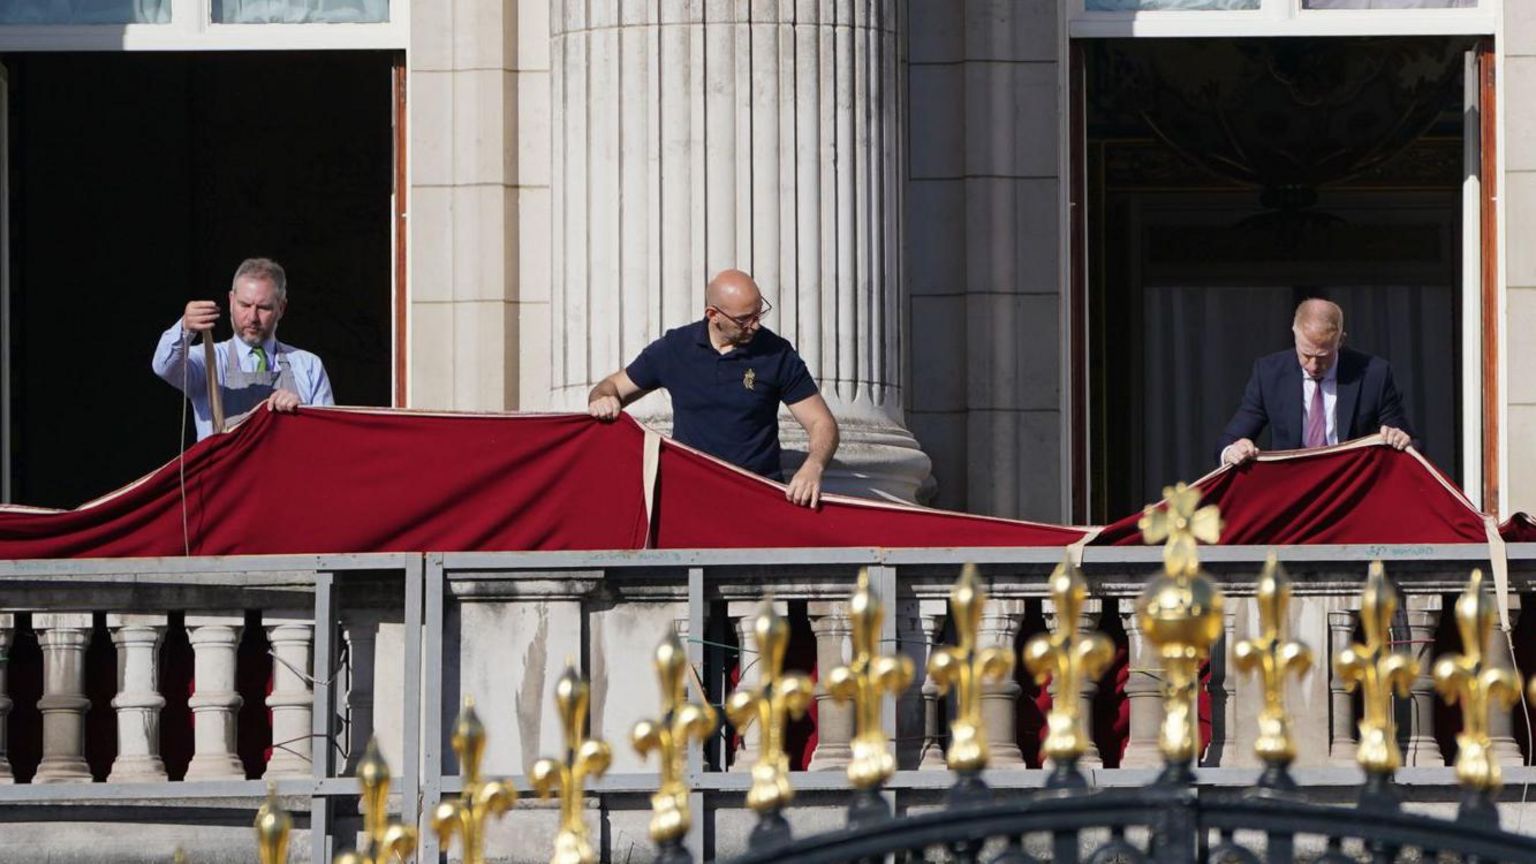 Royal servants getting the balcony ready